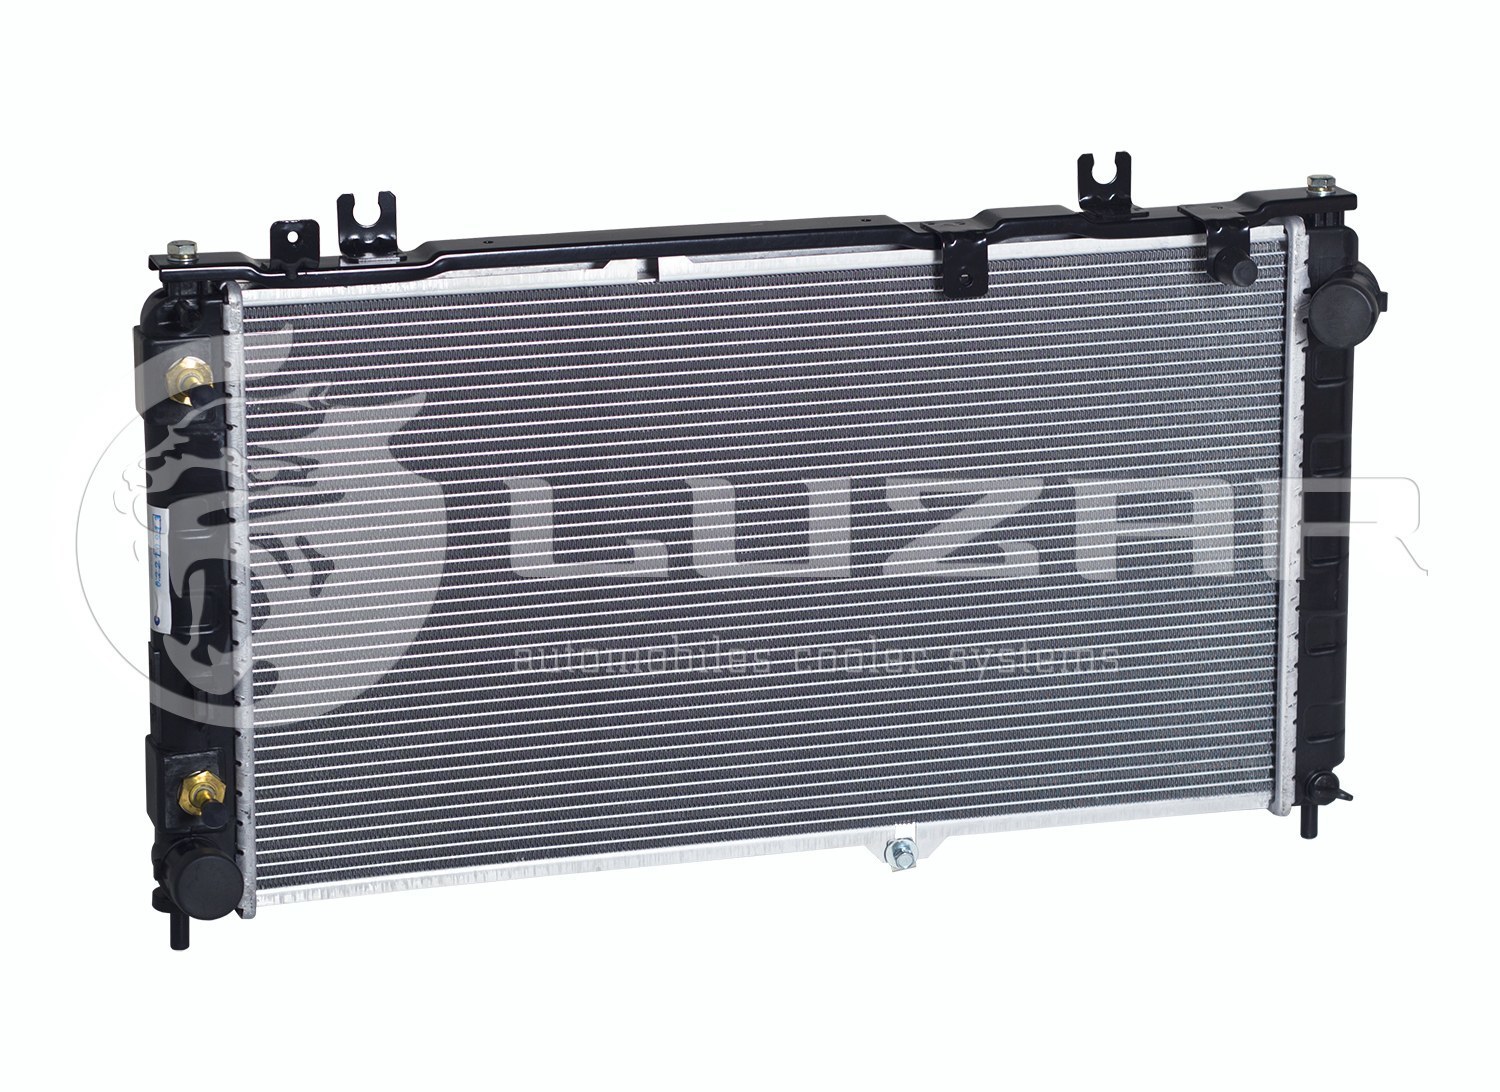 2192 171. Радиатор LUZAR LRC 0192b. LRC 01194 Лузар радиатор охл для а/м ВАЗ 2190 Гранта 15- at Тип KDAC. LRC 0190b. Радиатор охл.2190 Гранта LUZAR(4) lrc0192b с МКП,С конд..